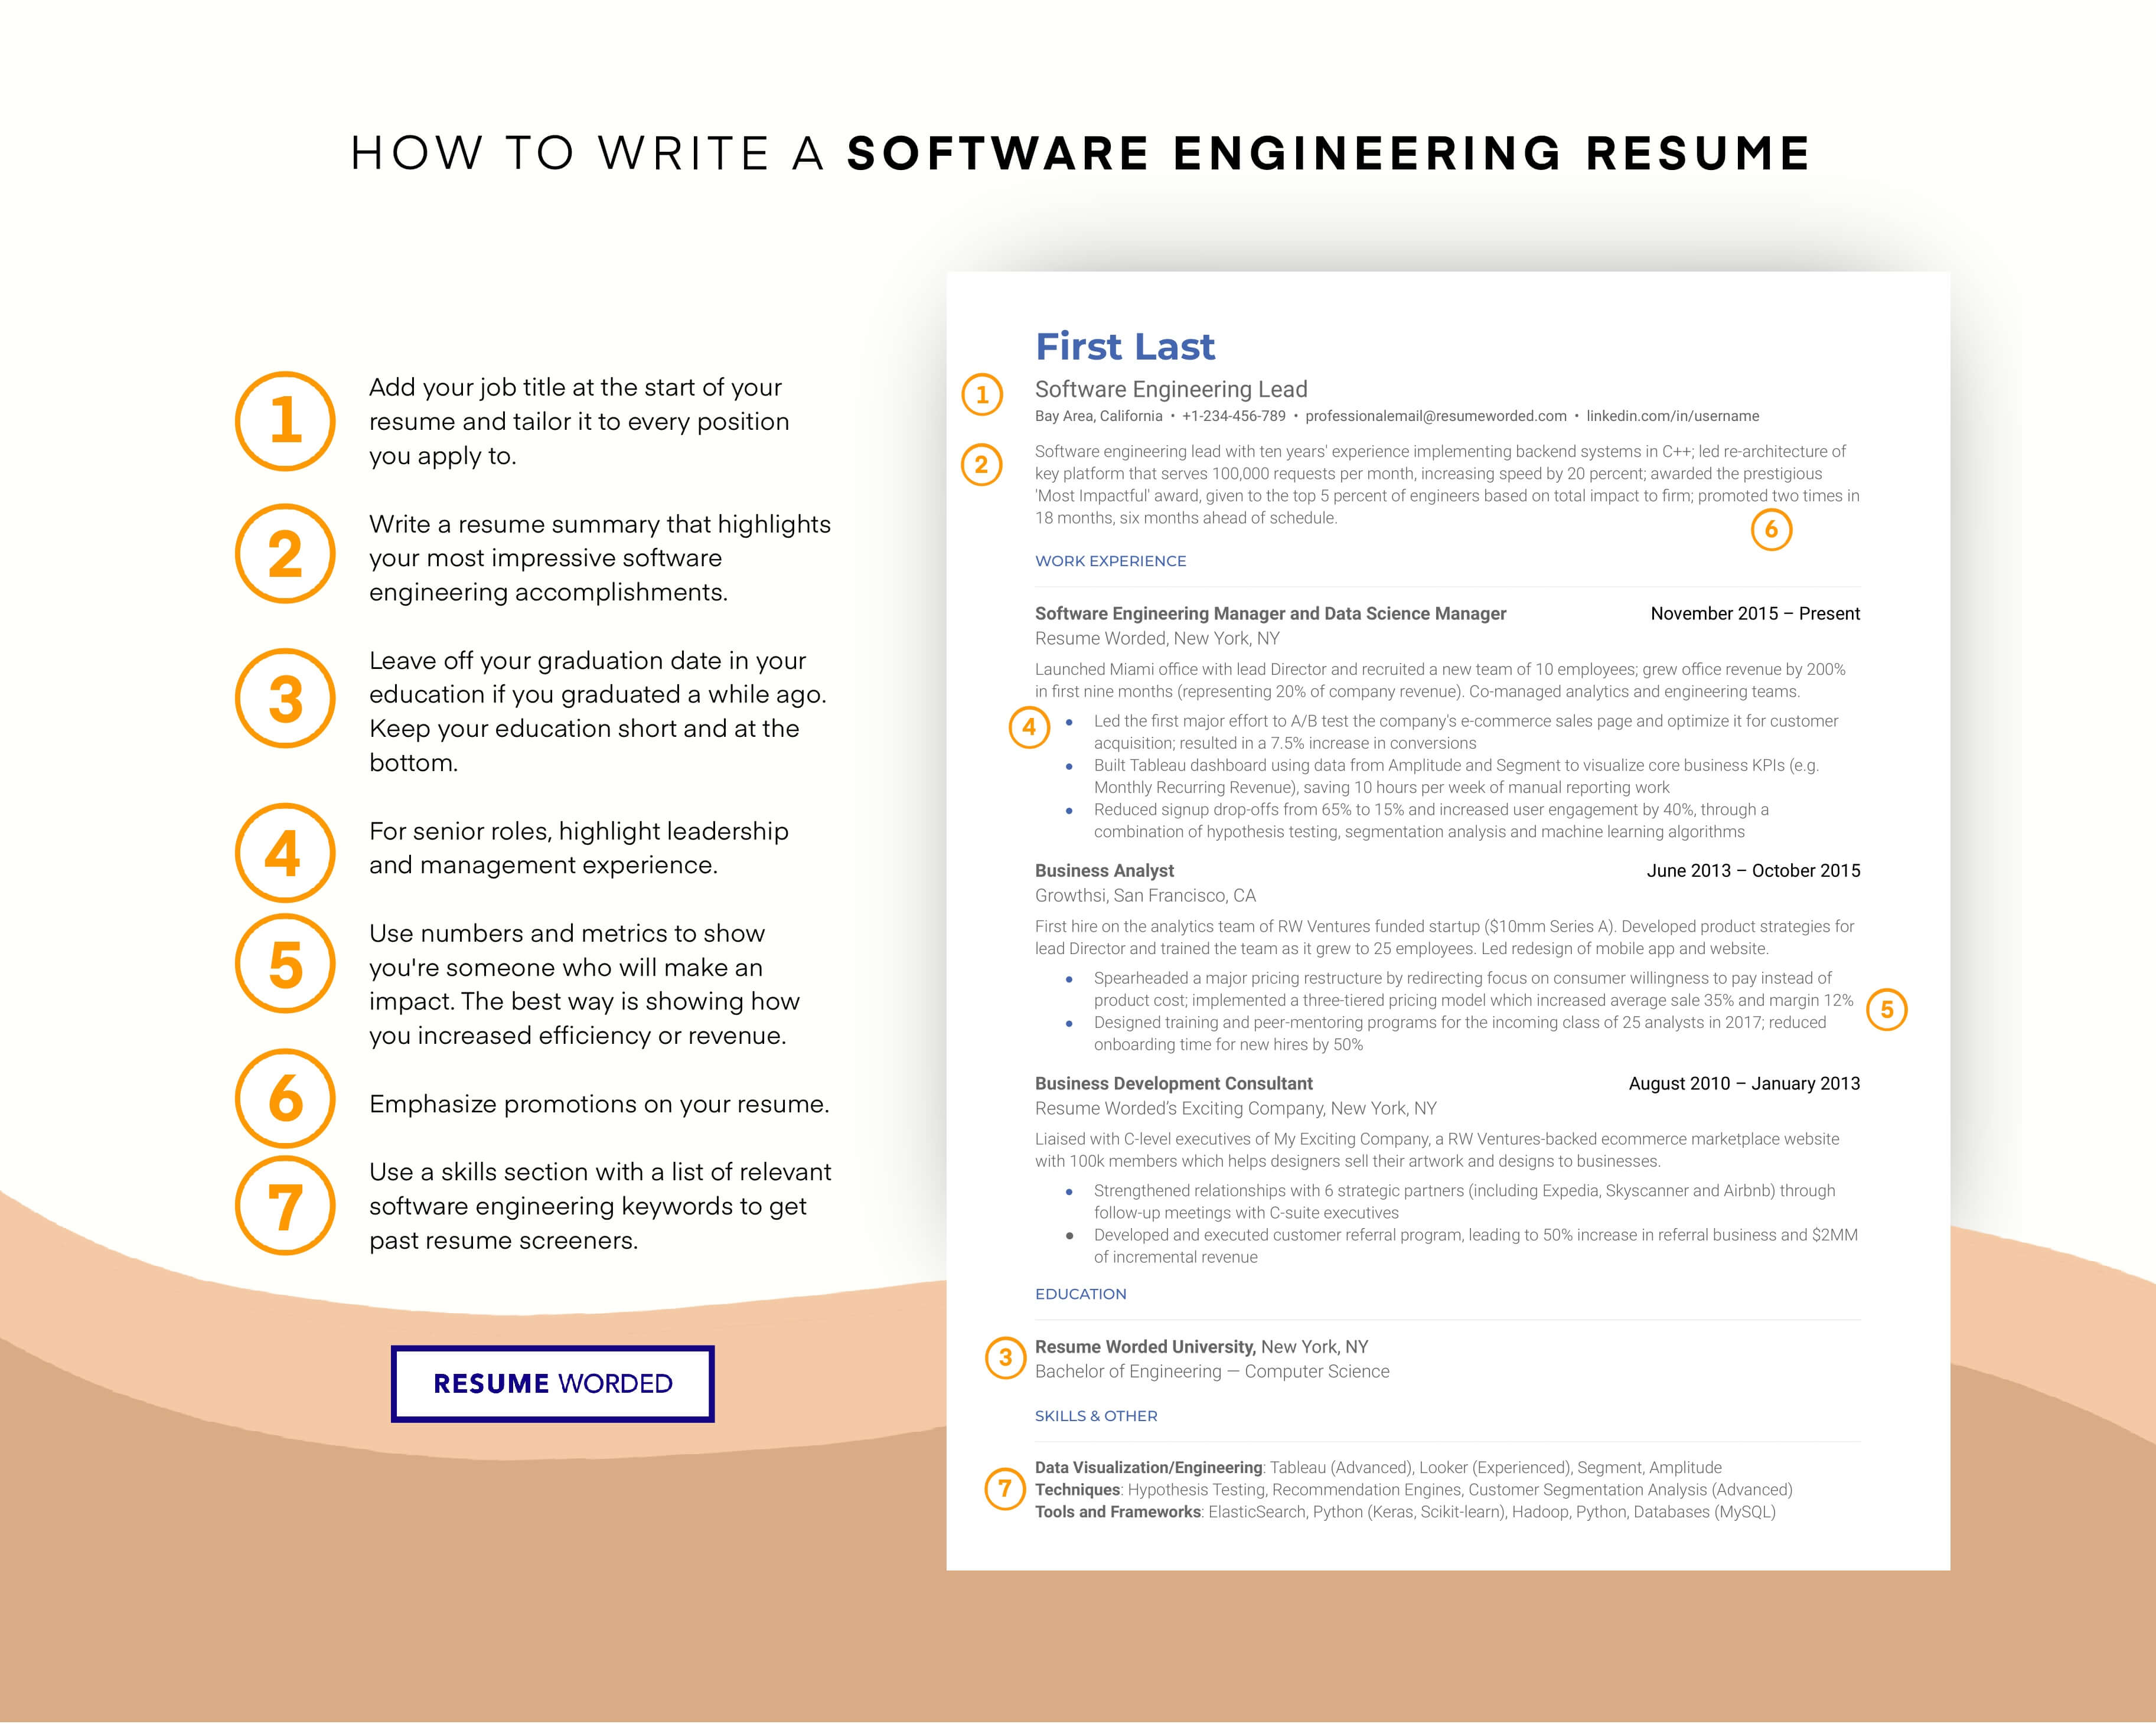 Highlight programming languages and frameworks - Entry Level Software Engineer Resume